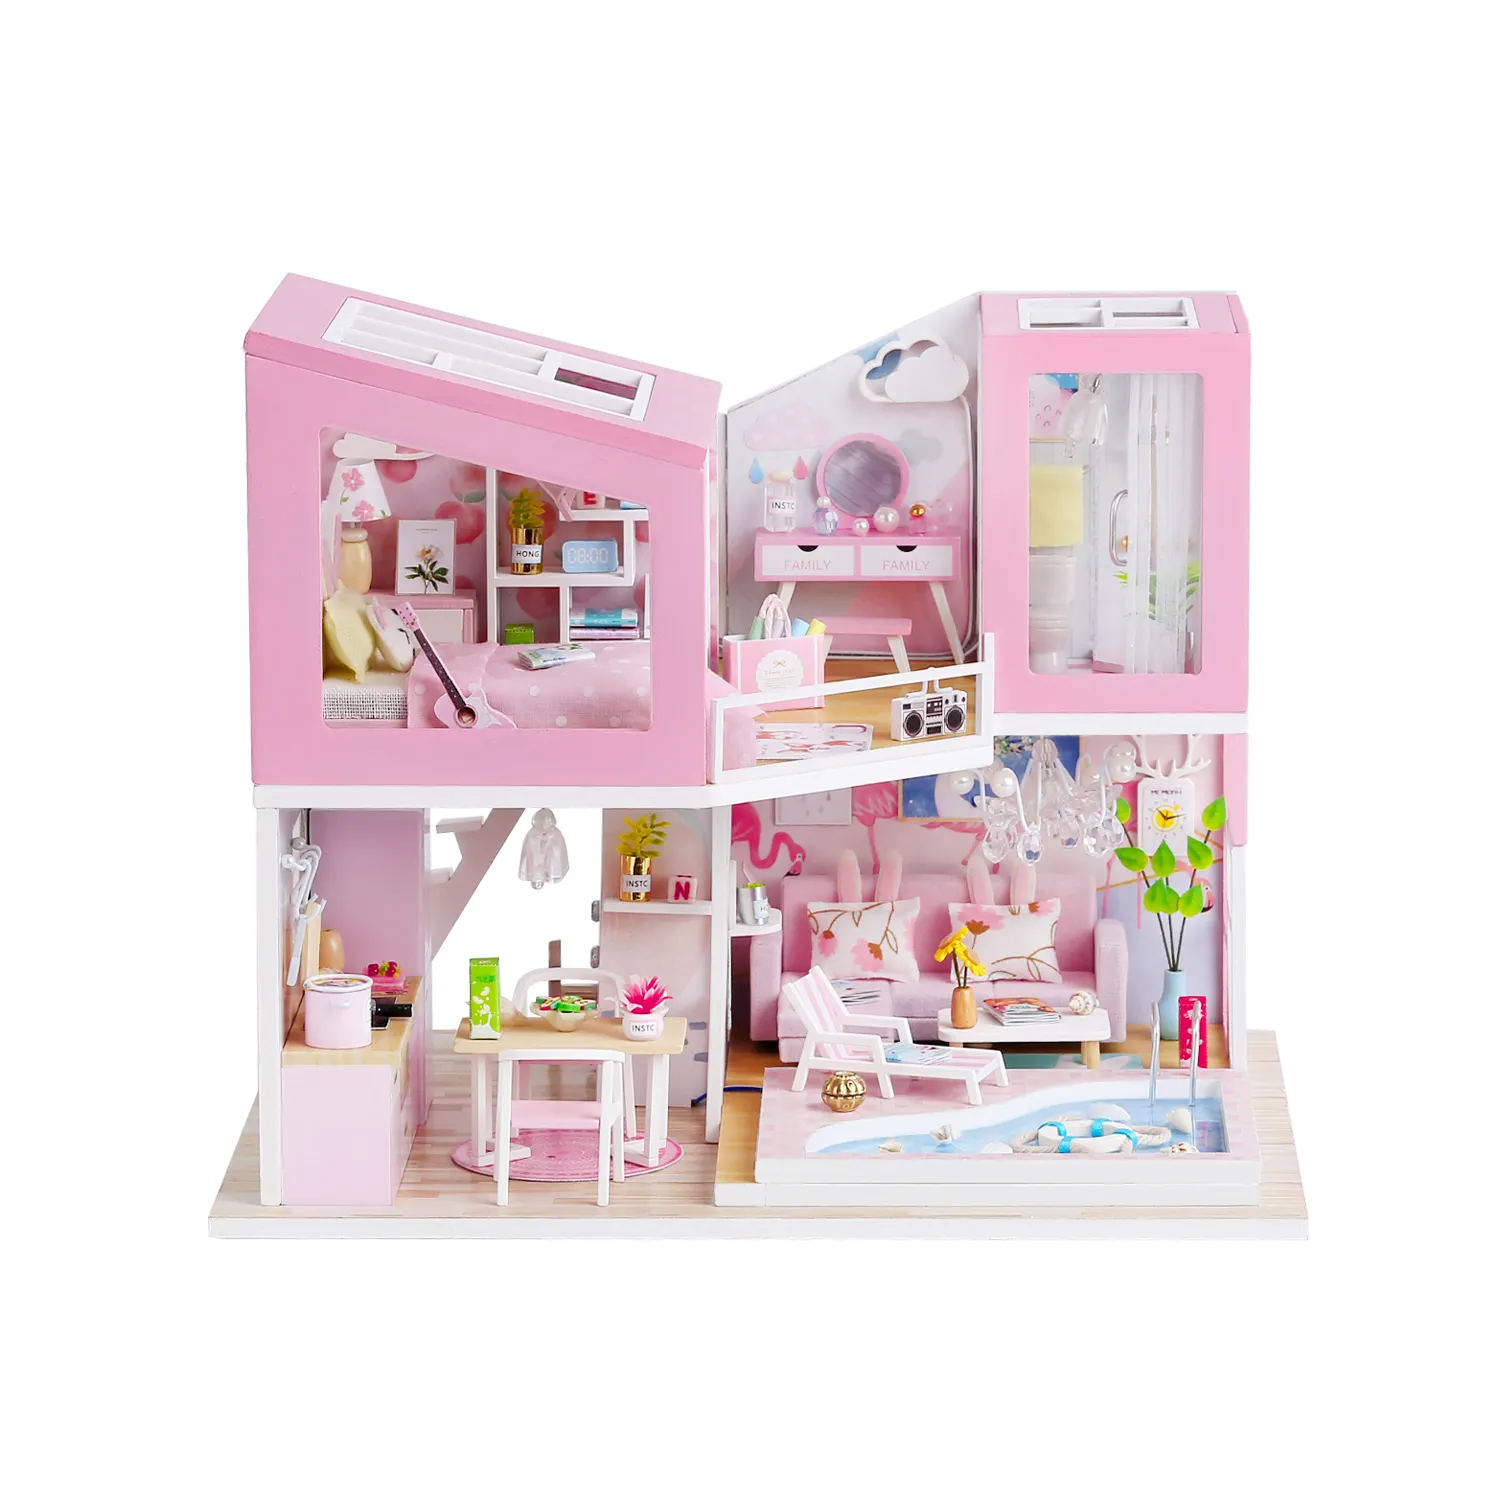 Hongda new product ideas 2023 miniature bedroom setminiature kitchen furniture miniature fashion house diy diorama kit